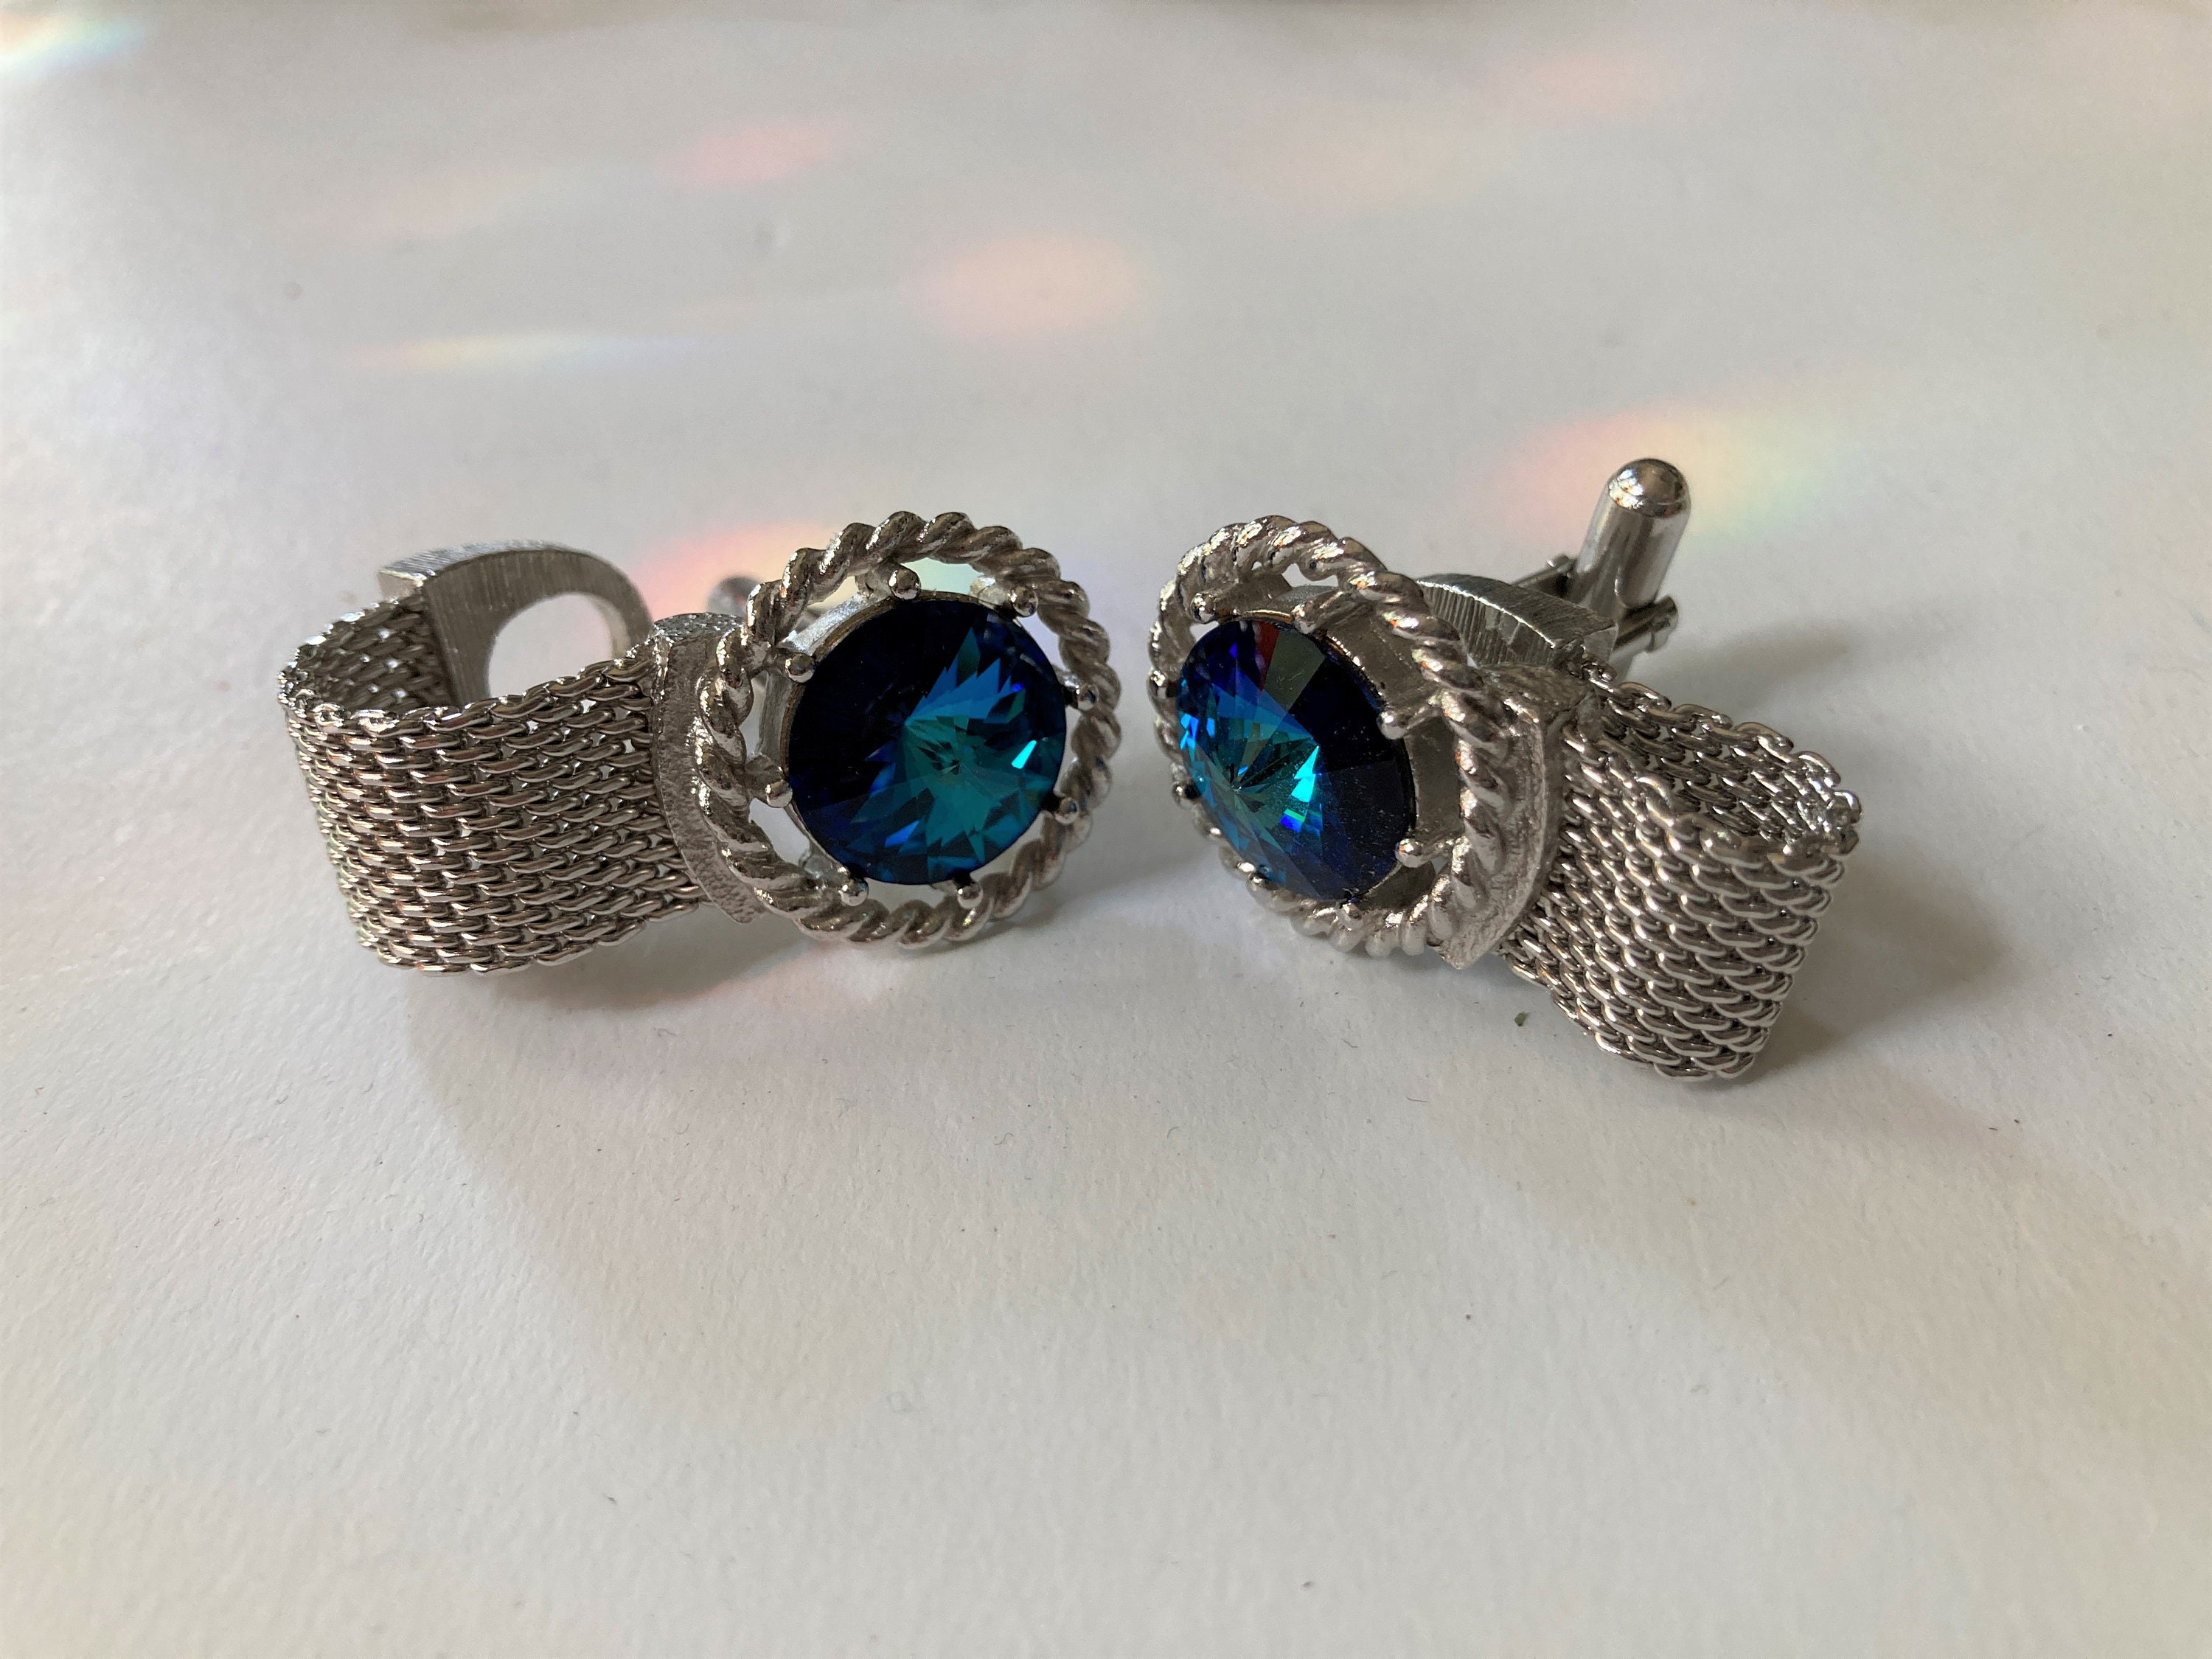 Blue Swarovski Crystal Cufflinks